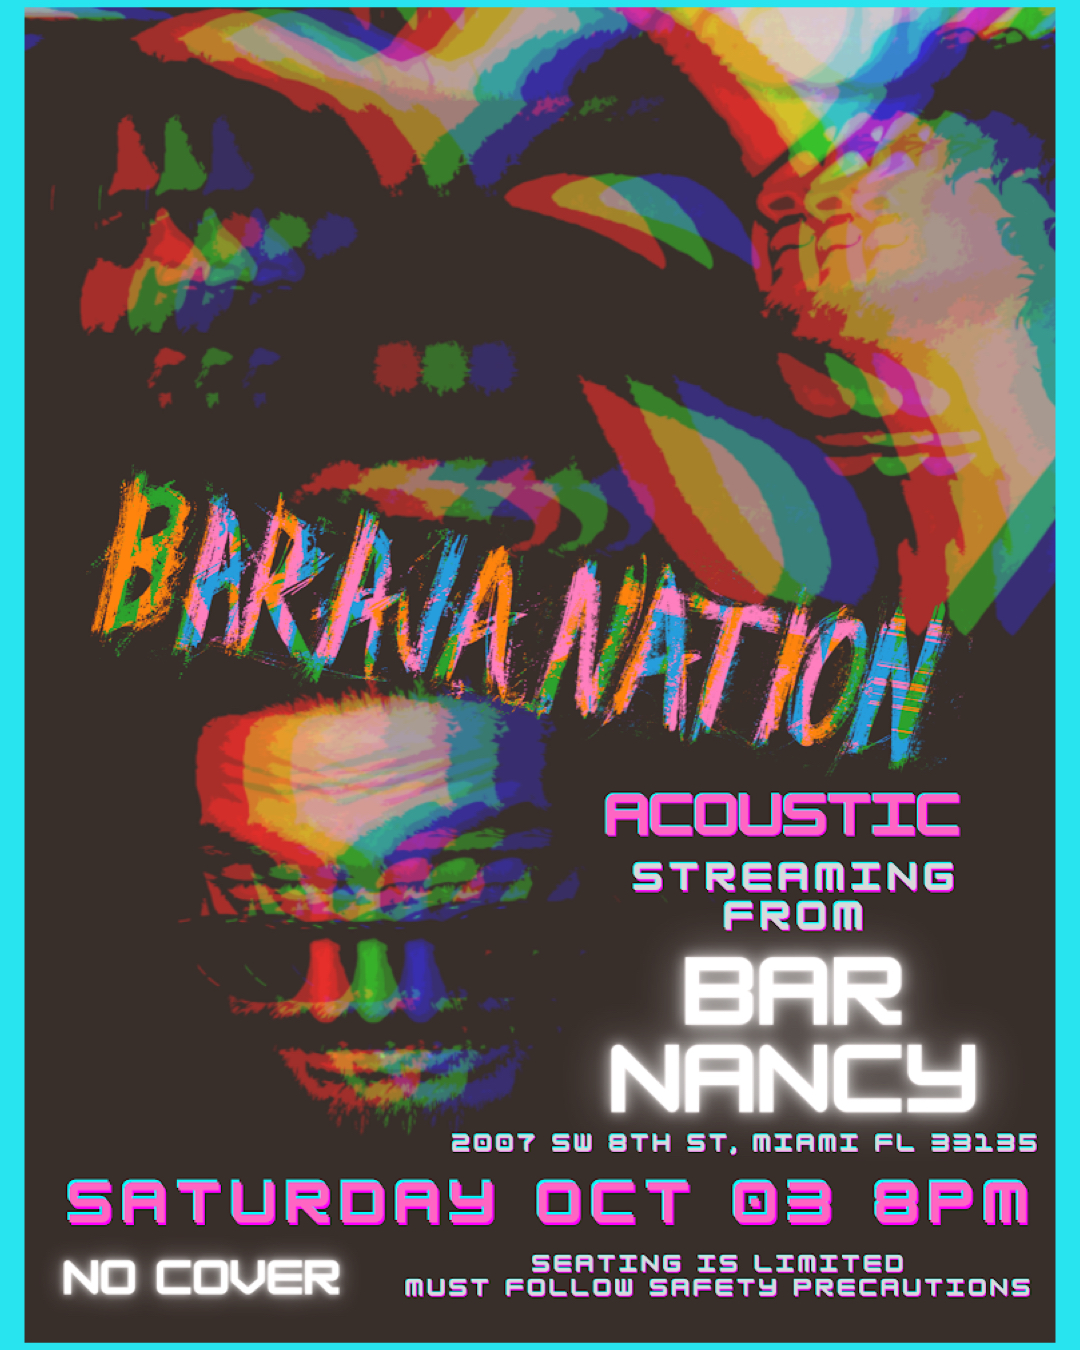 Baraja Nation - Acoustic @ Bar Nancy